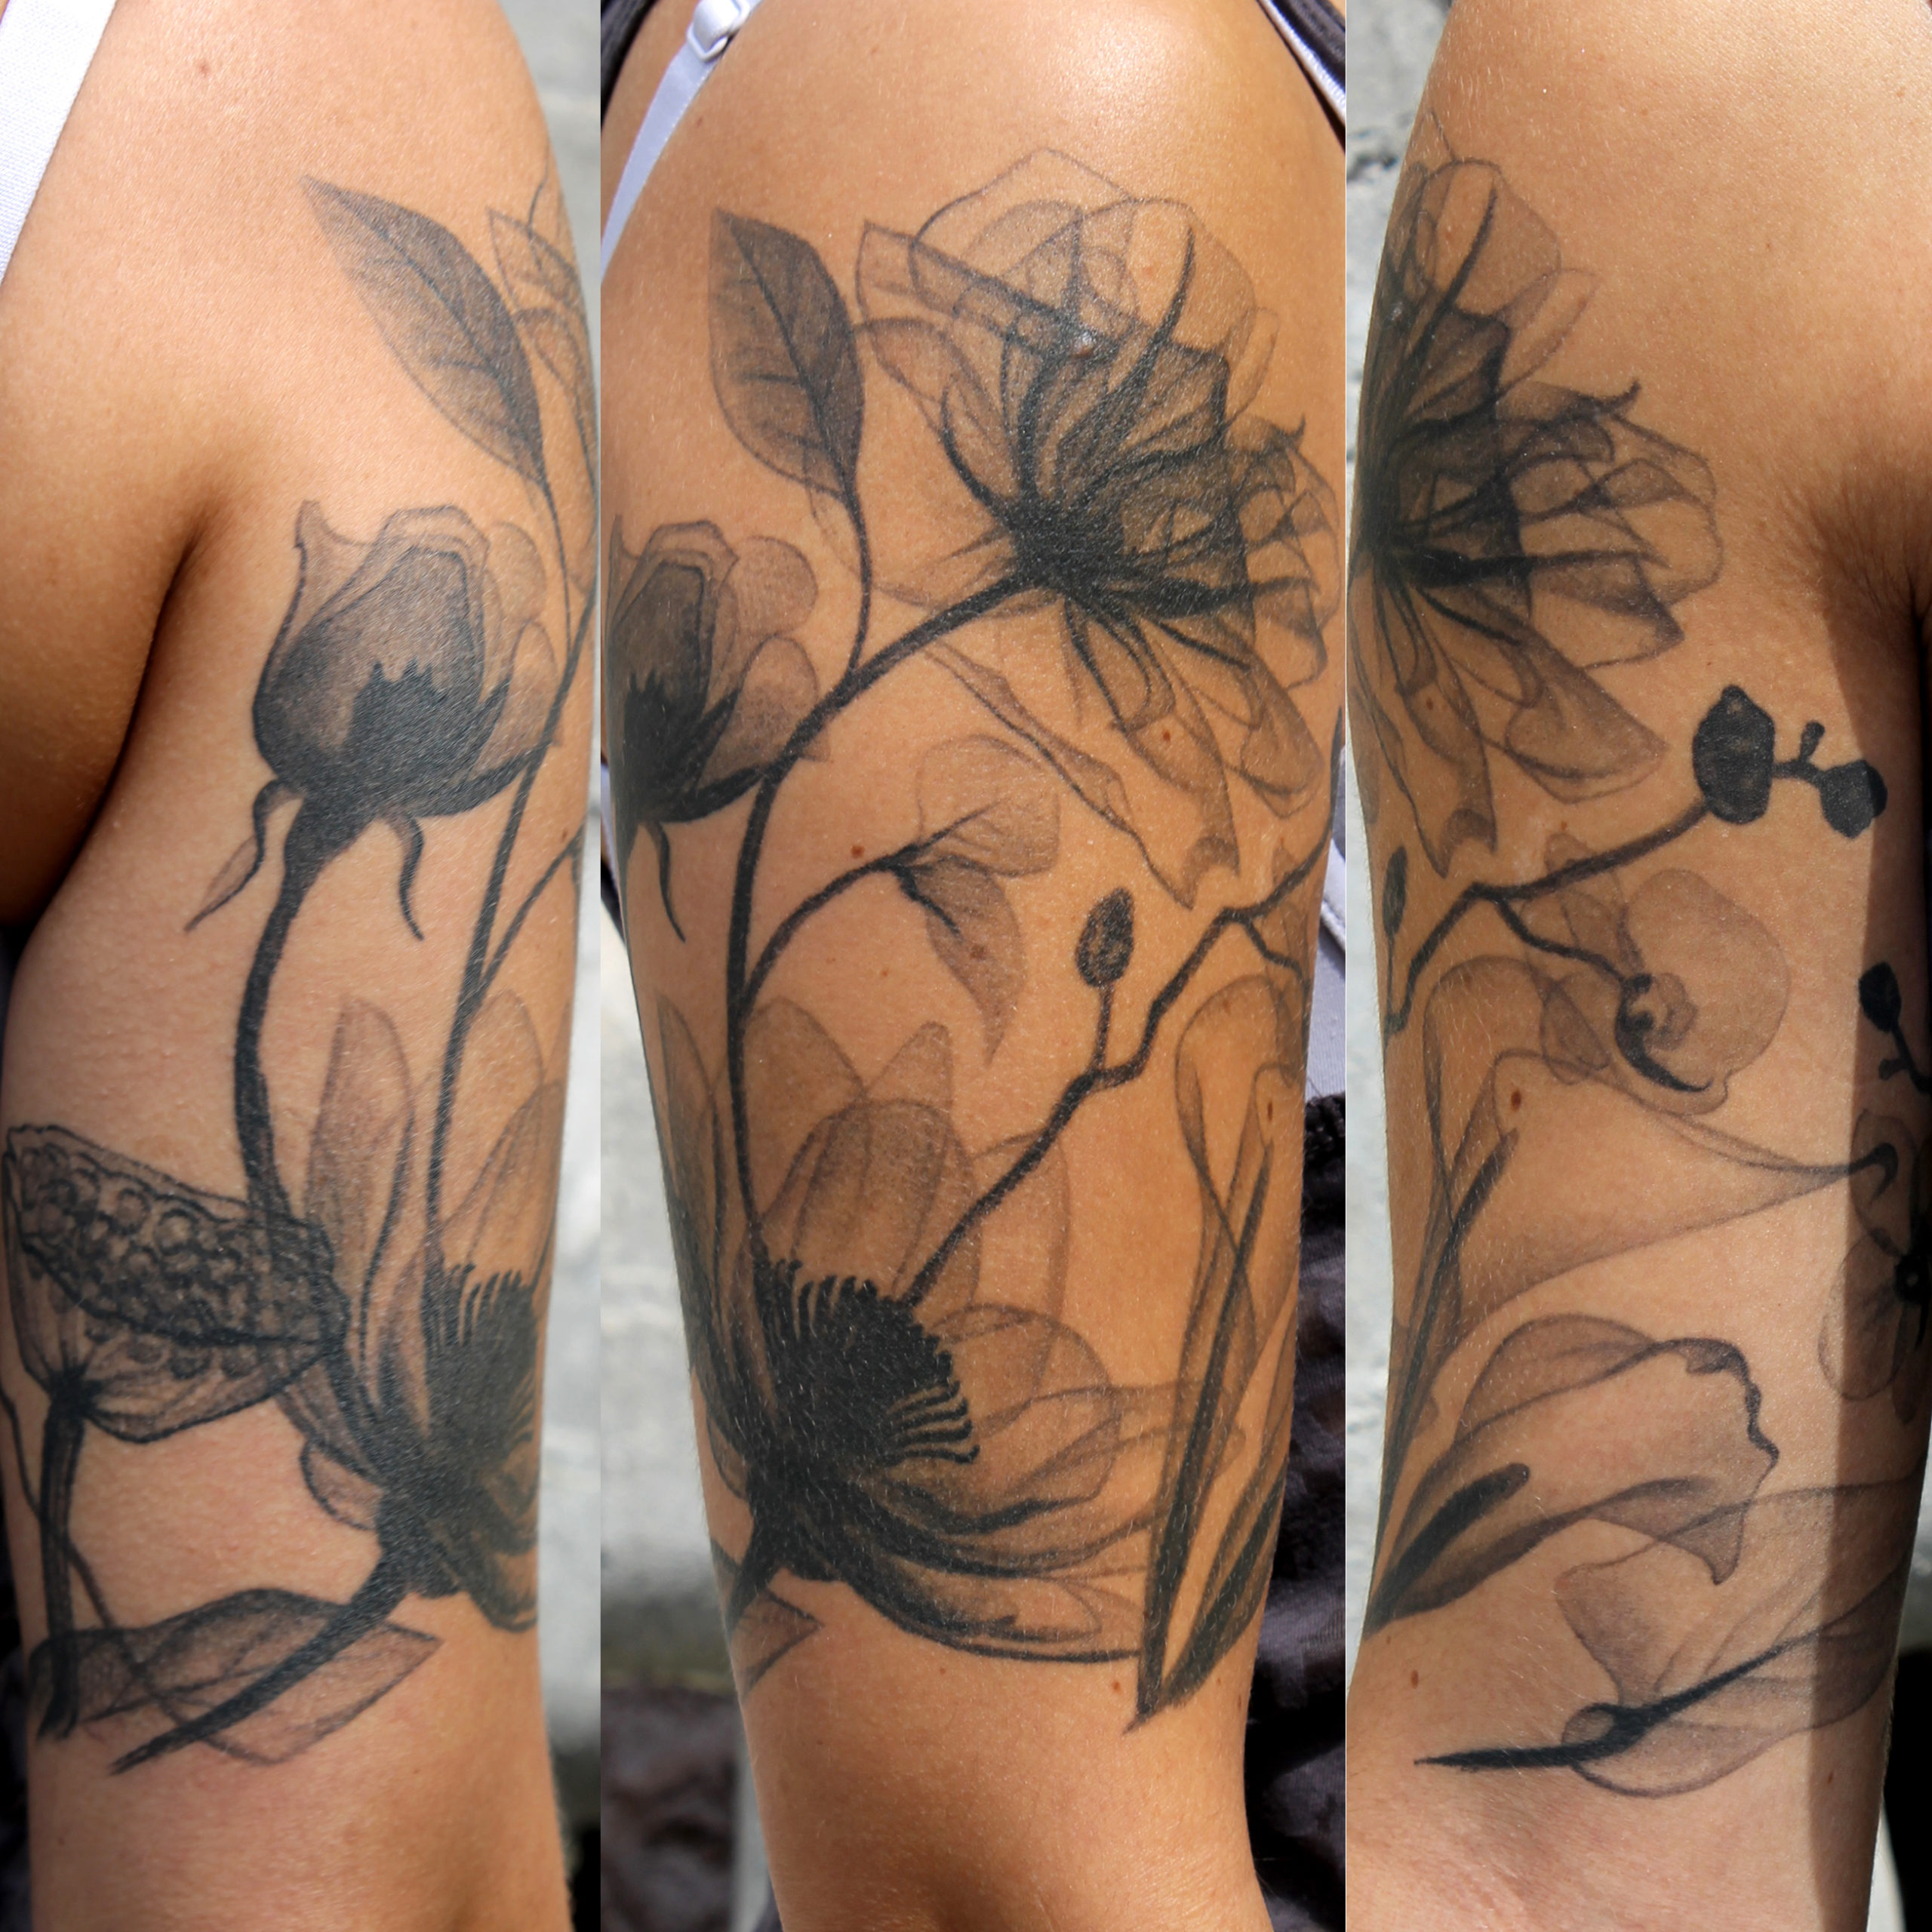 Inspiring Mesh on Twitter 9 Trendy XRay Flower Tattoos  httpstcohL3MkPnKyj flowertattoo flowertattoos flowers flower xray  XRAY xraytattoo xraytattoo xrayflowertattoo xrayflowertattoos  xrayflowertattoos tattooideas tattoos 